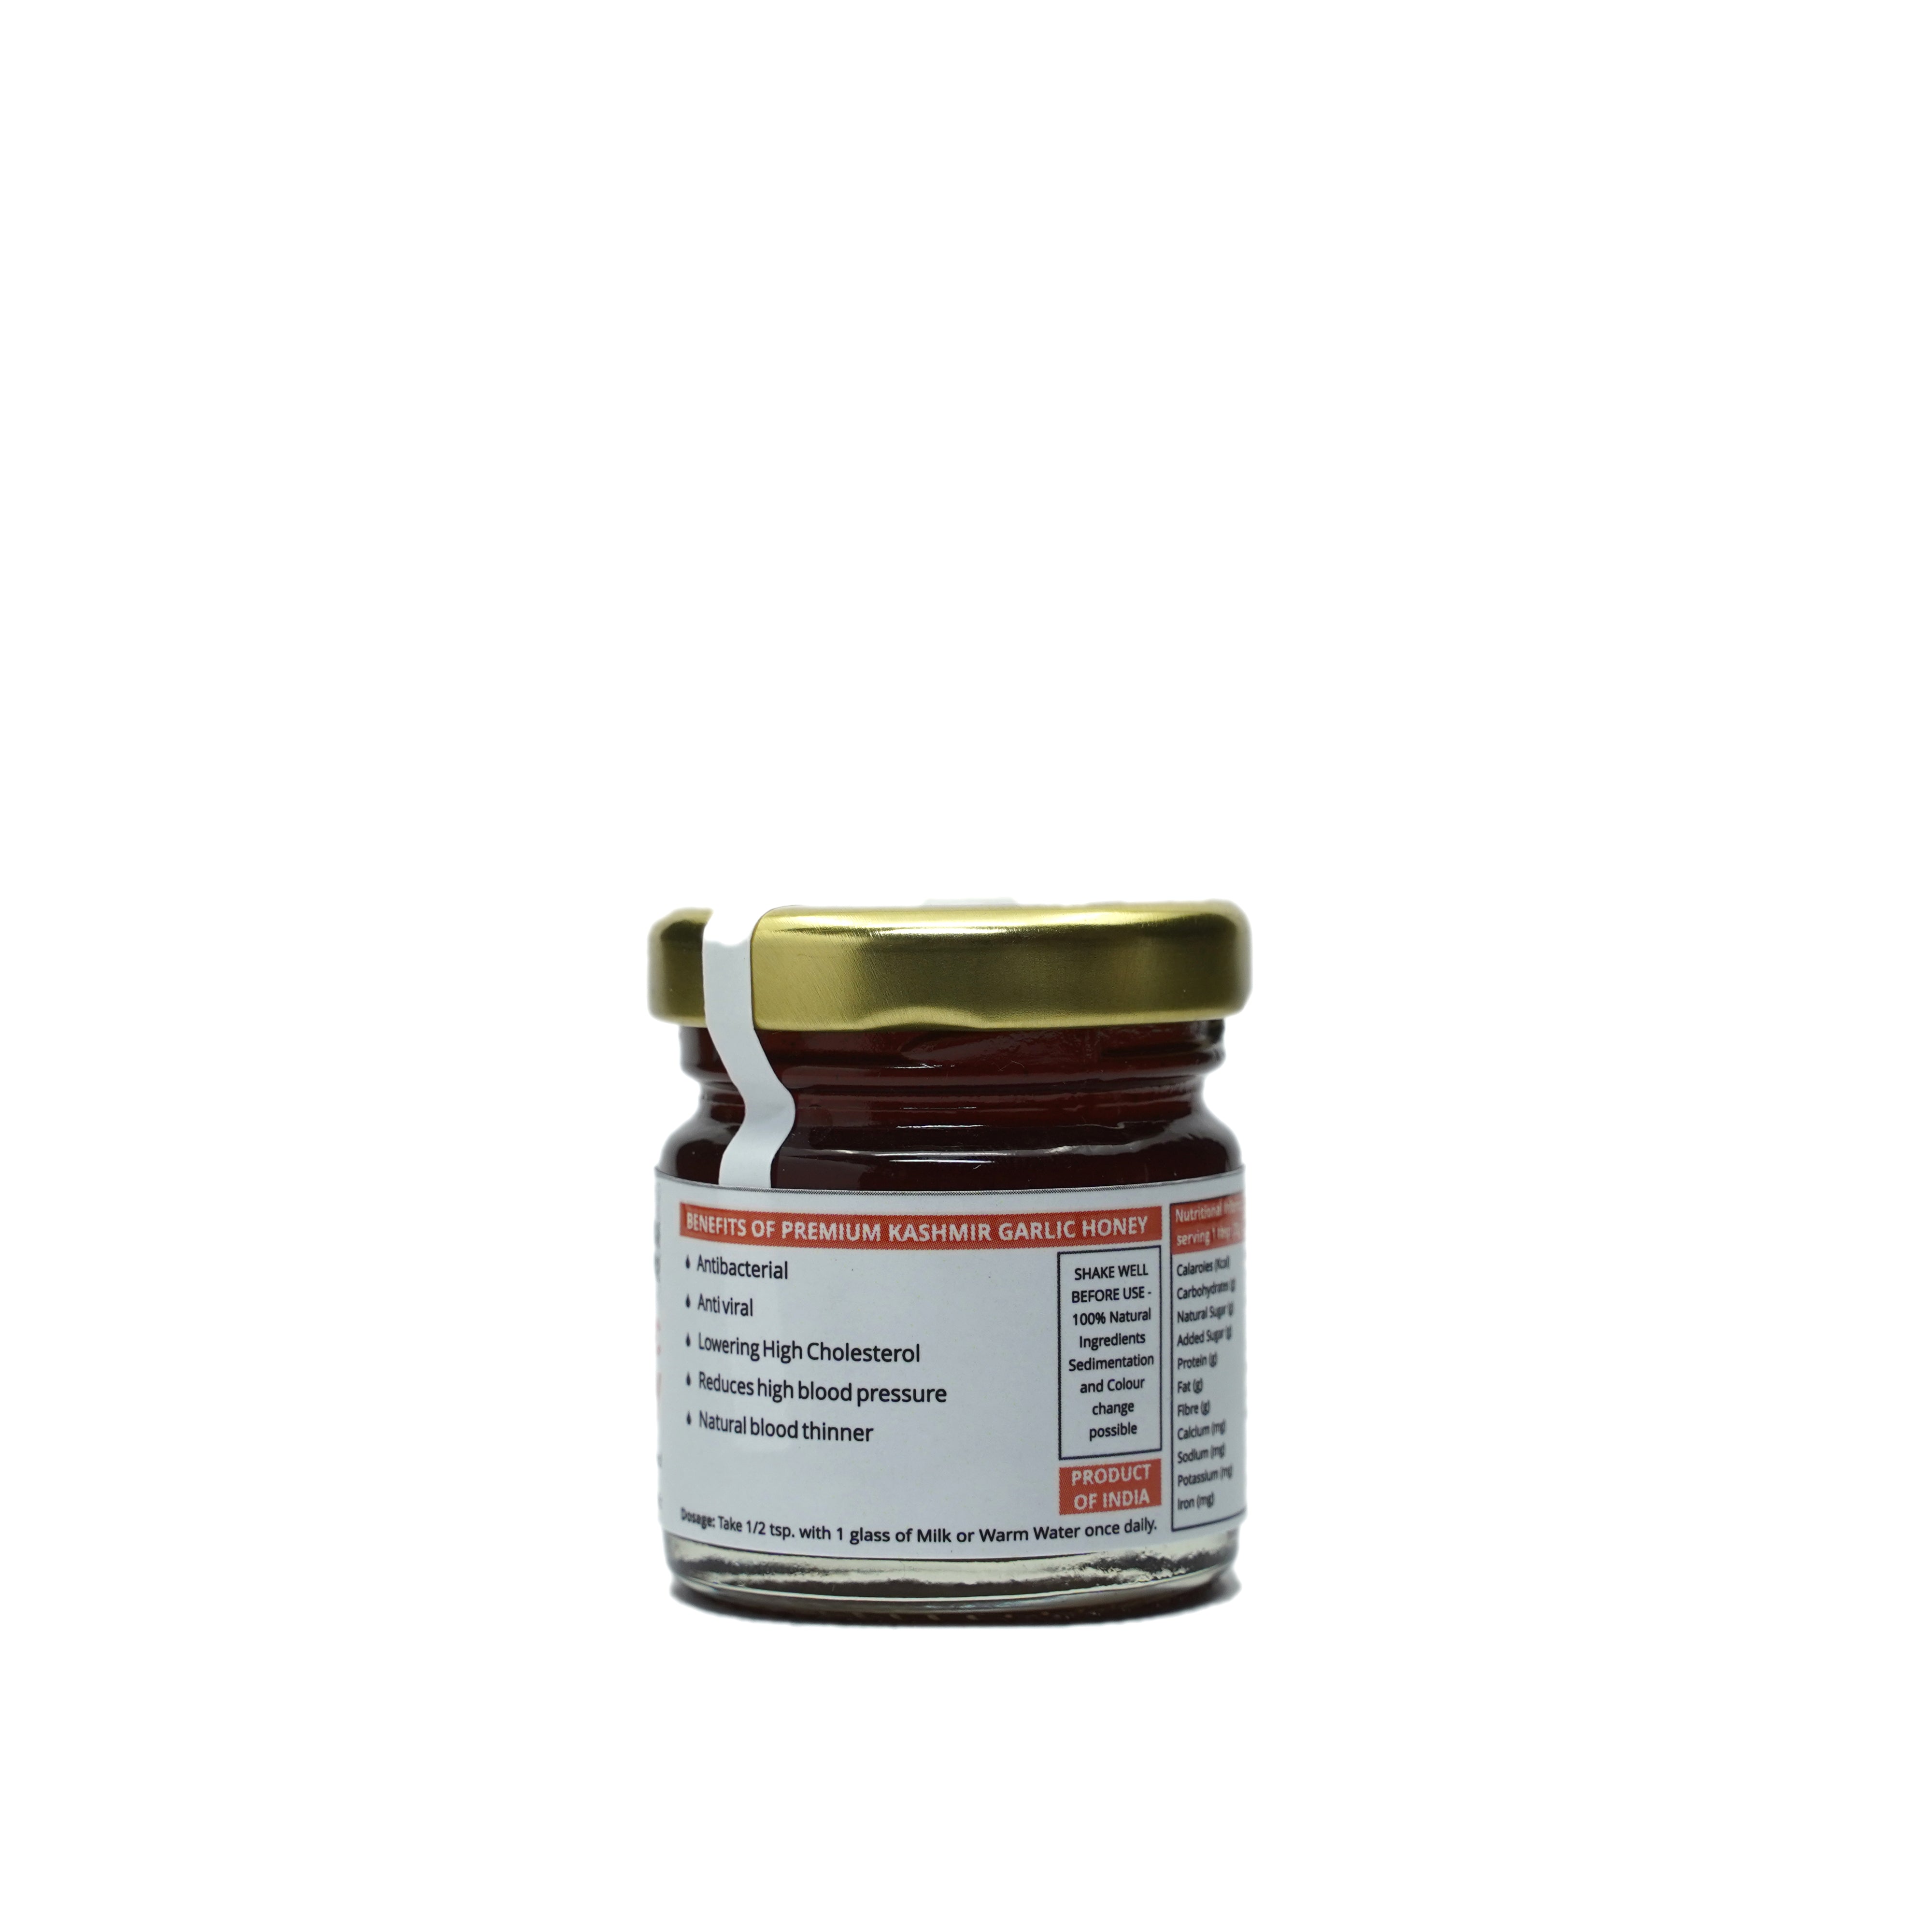 Premium Kashmir Garlic Honey